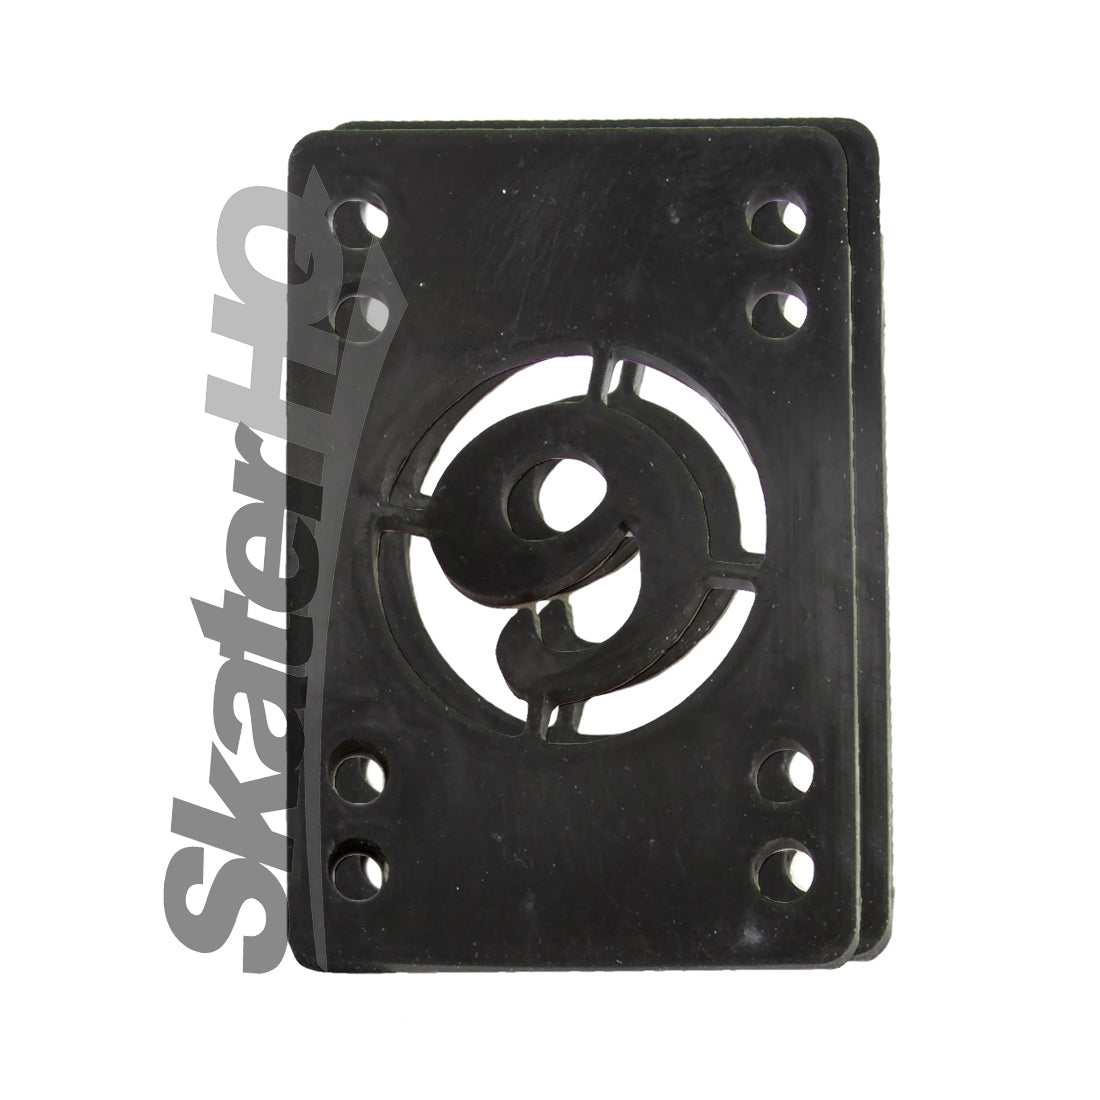 Sector 9 Soft 1/8 Shock Pads 2pk - Black Skateboard Hardware and Parts